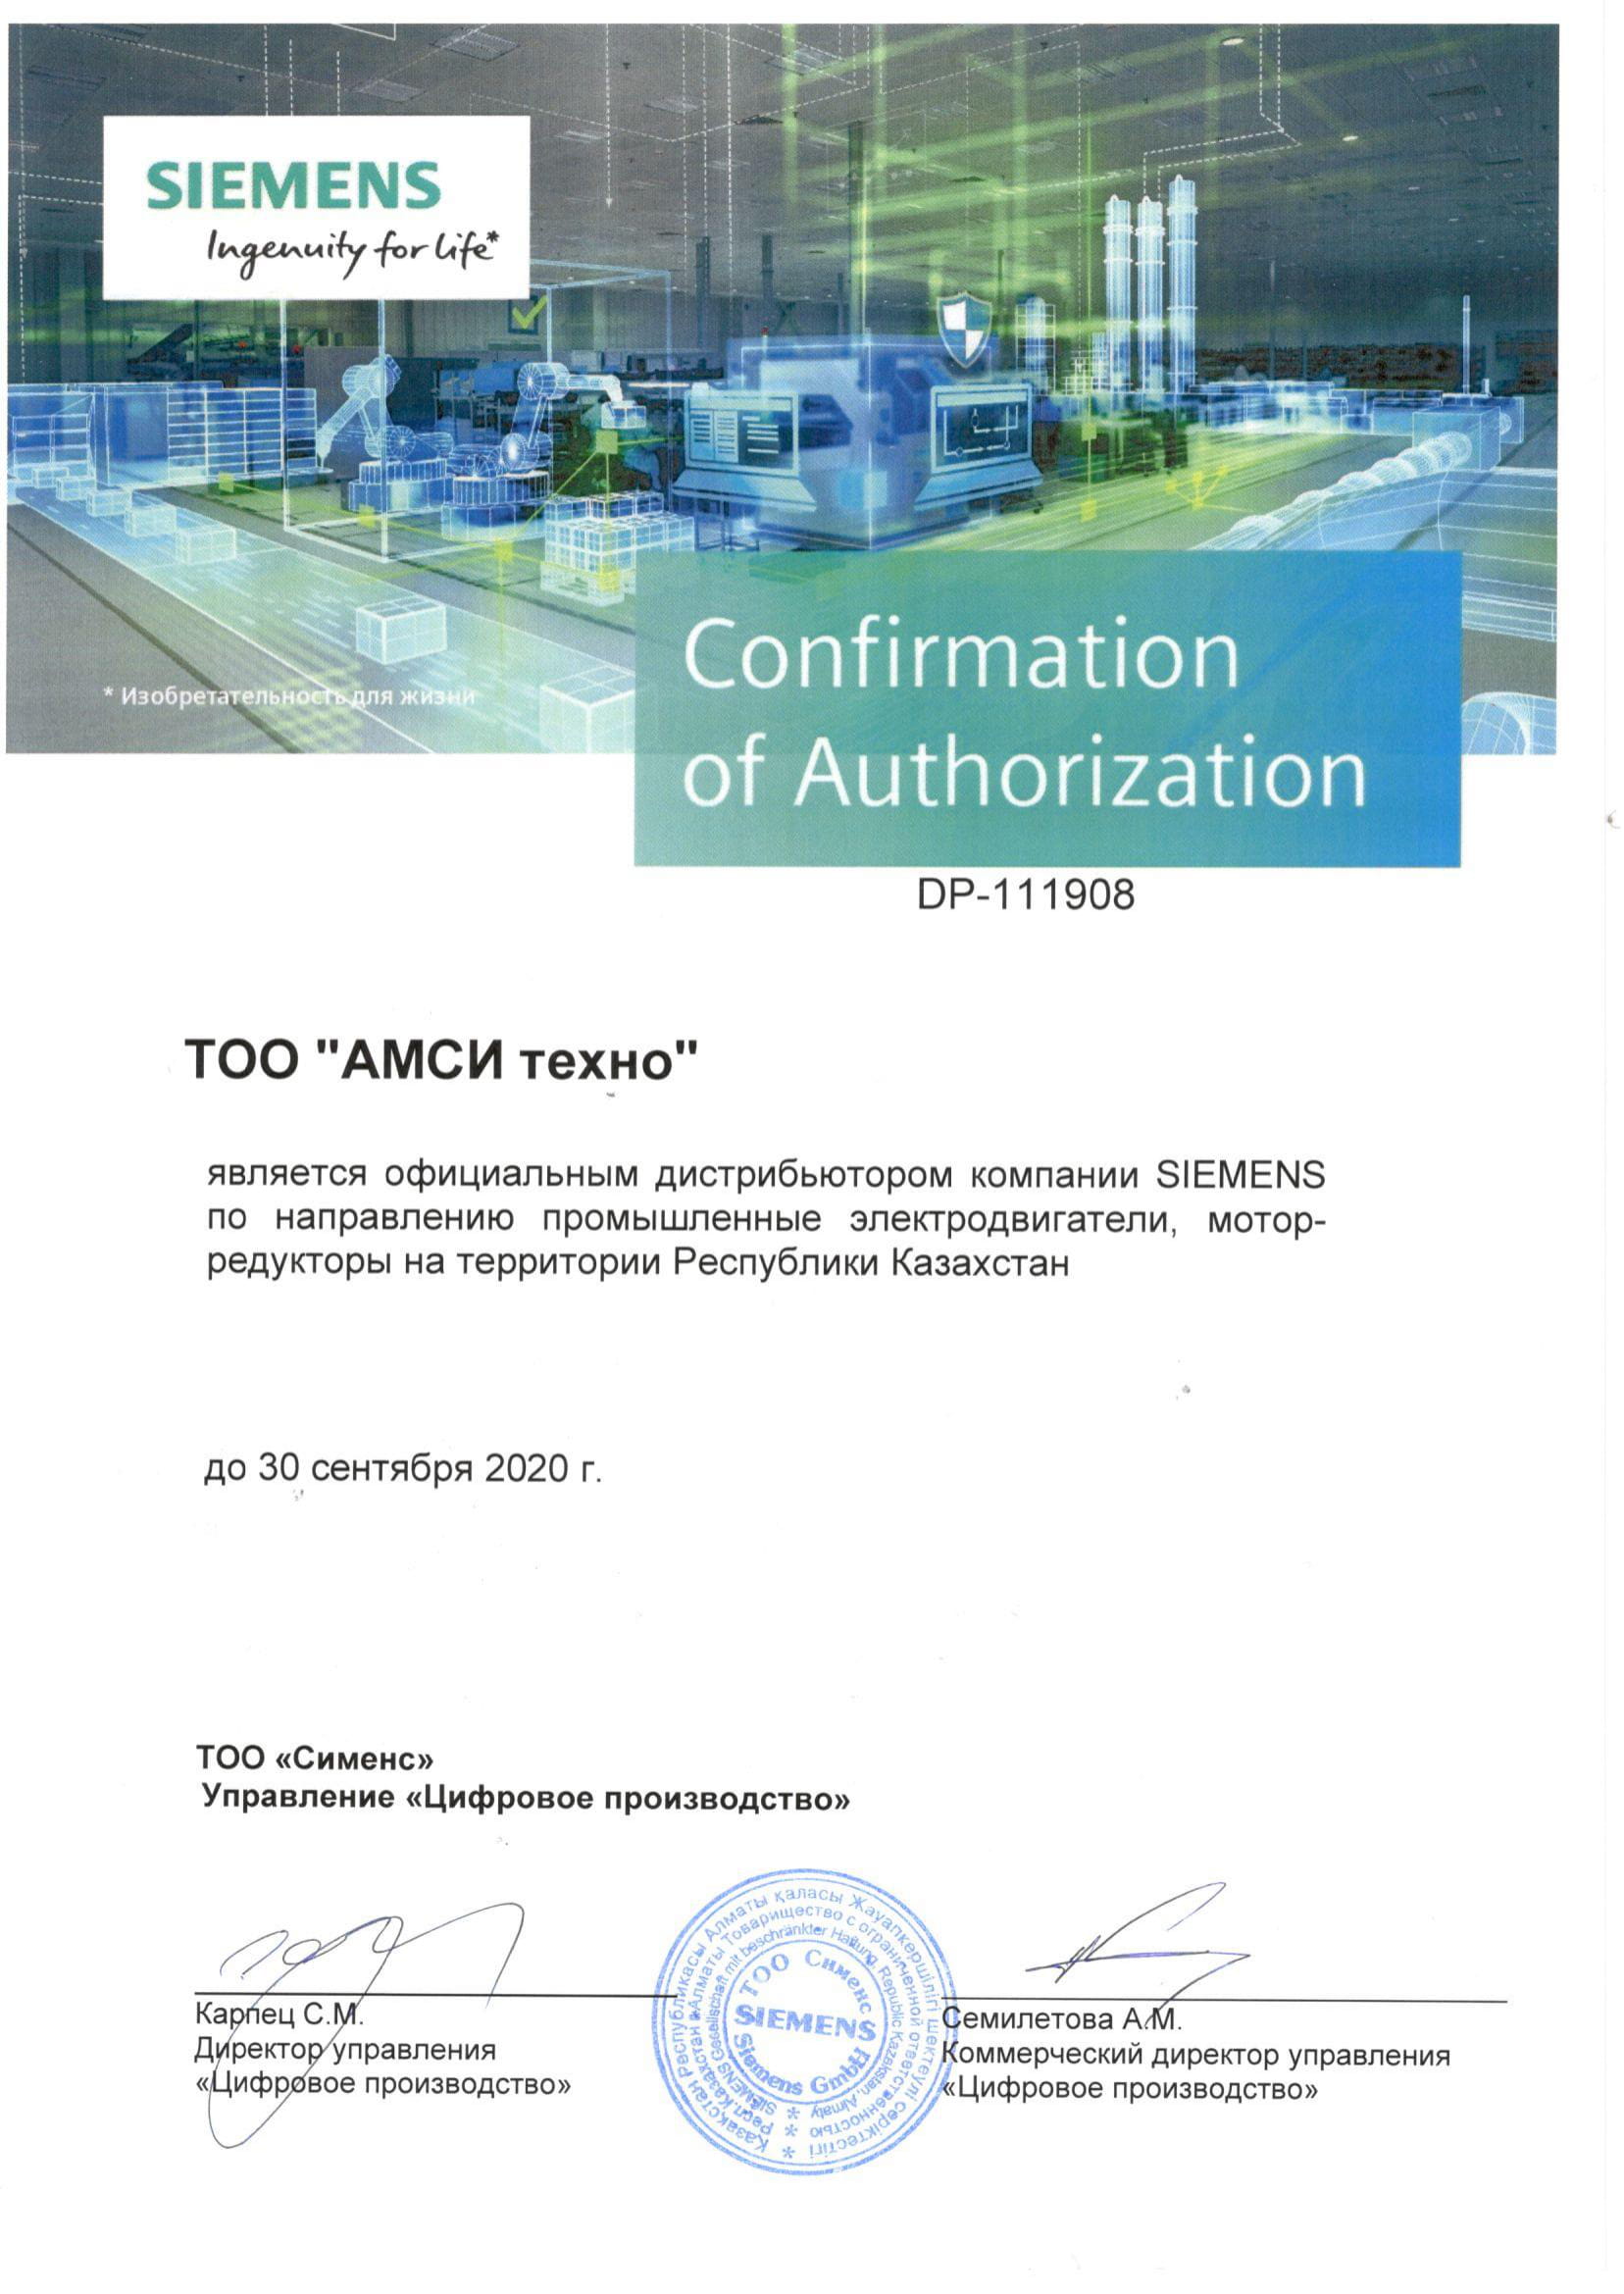 Дилерский сертификат Siemens на 2020 год